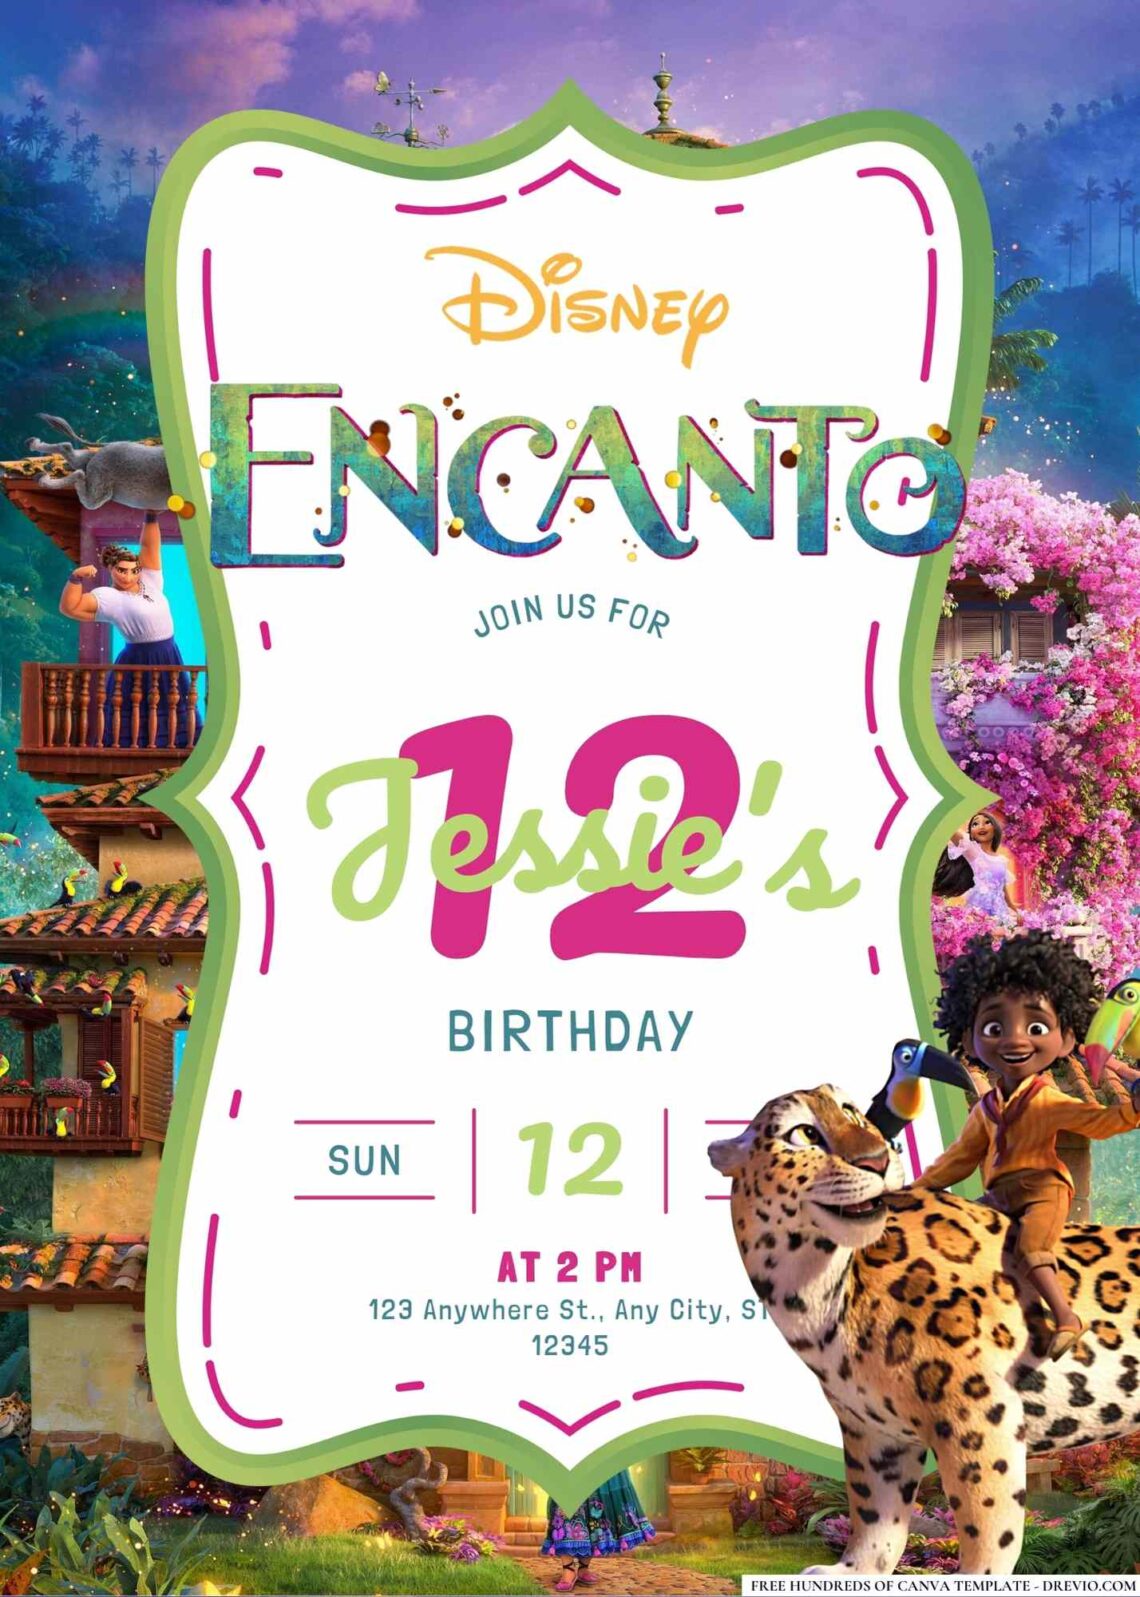 FREE Encanto Birthday Invitations